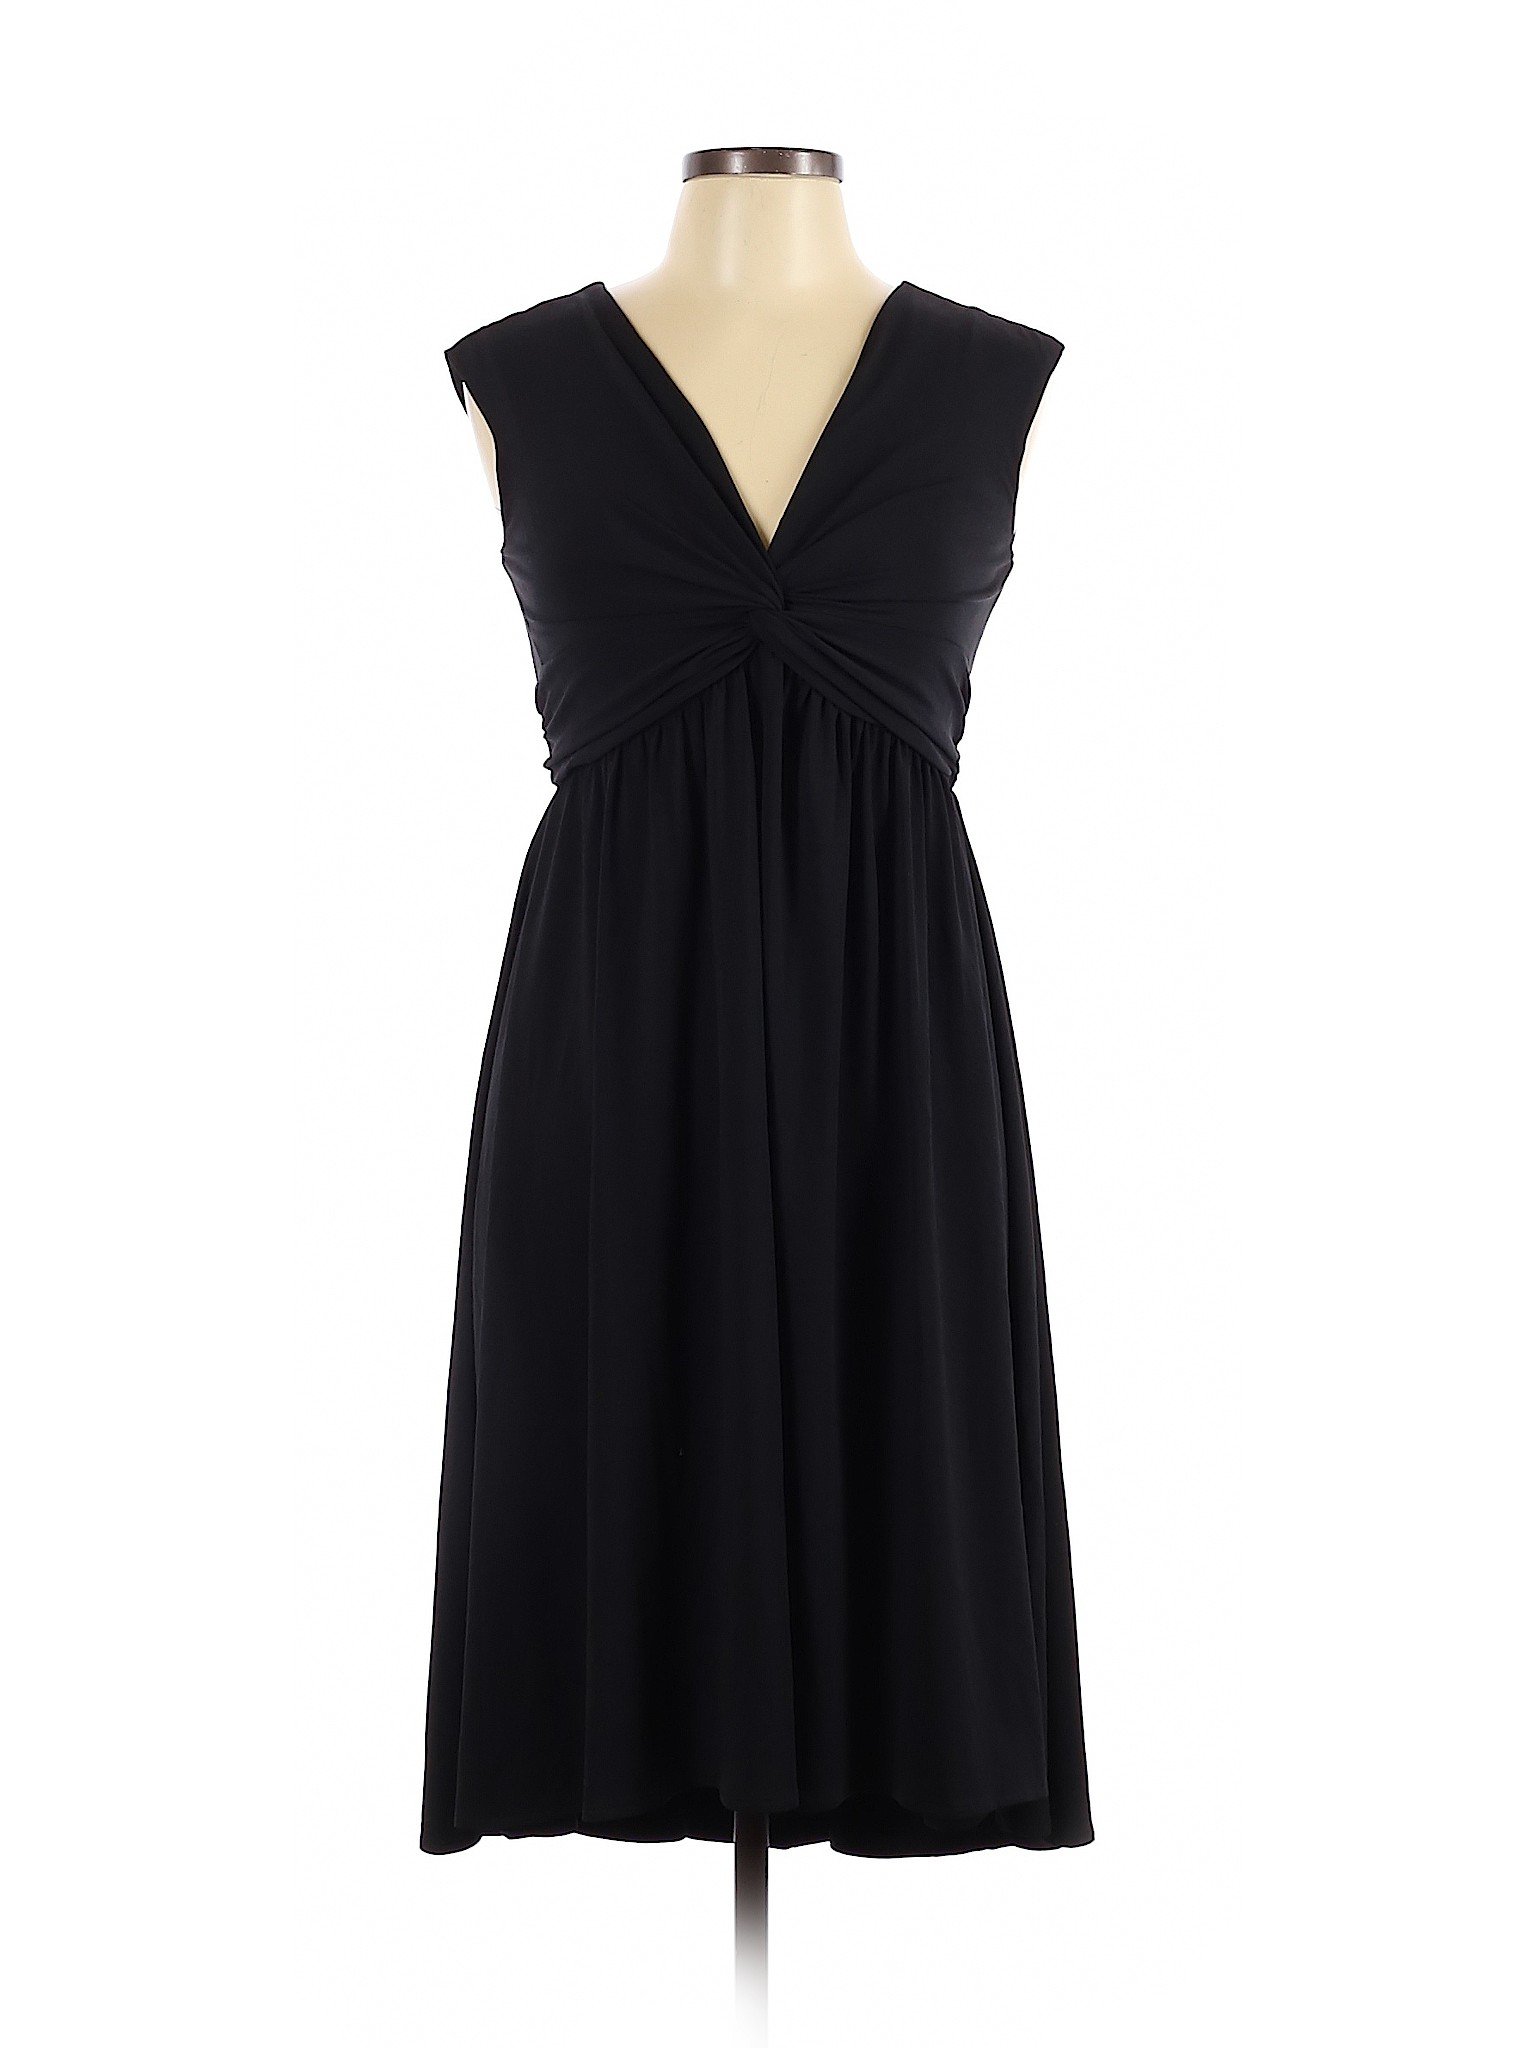 Maggy London Women Black Casual Dress 12 Petites | eBay